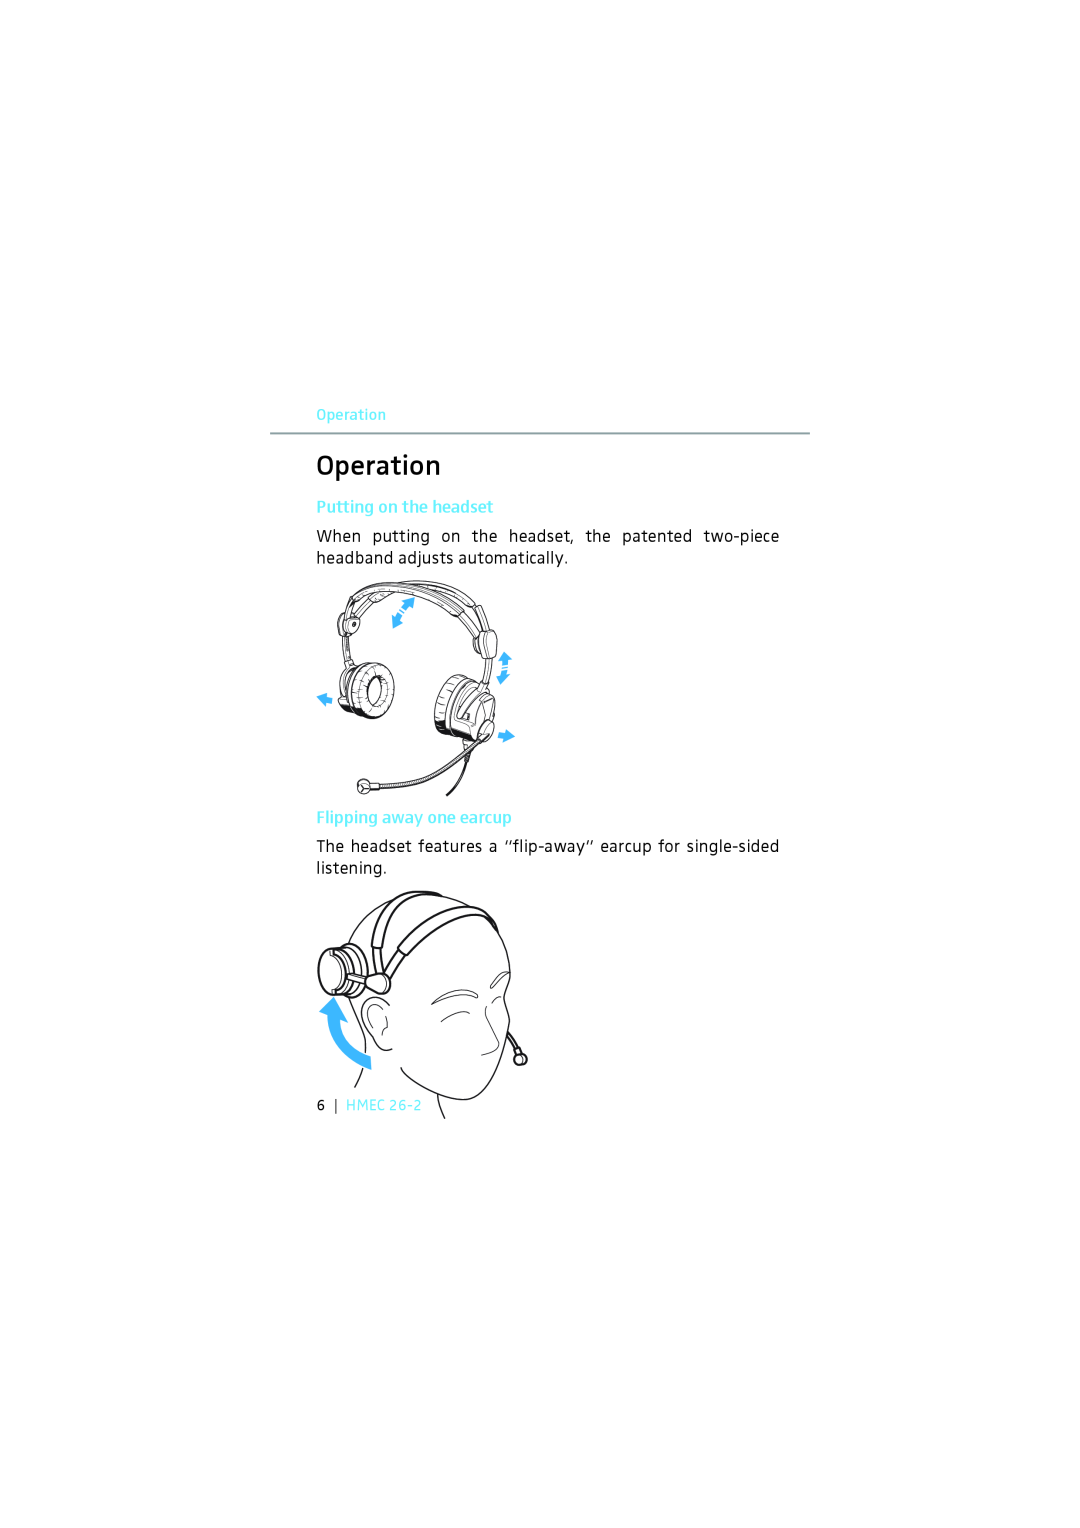 Sennheiser HMEC 26-2 instruction manual Operation, Putting on the headset, Flipping away one earcup, Hmec 